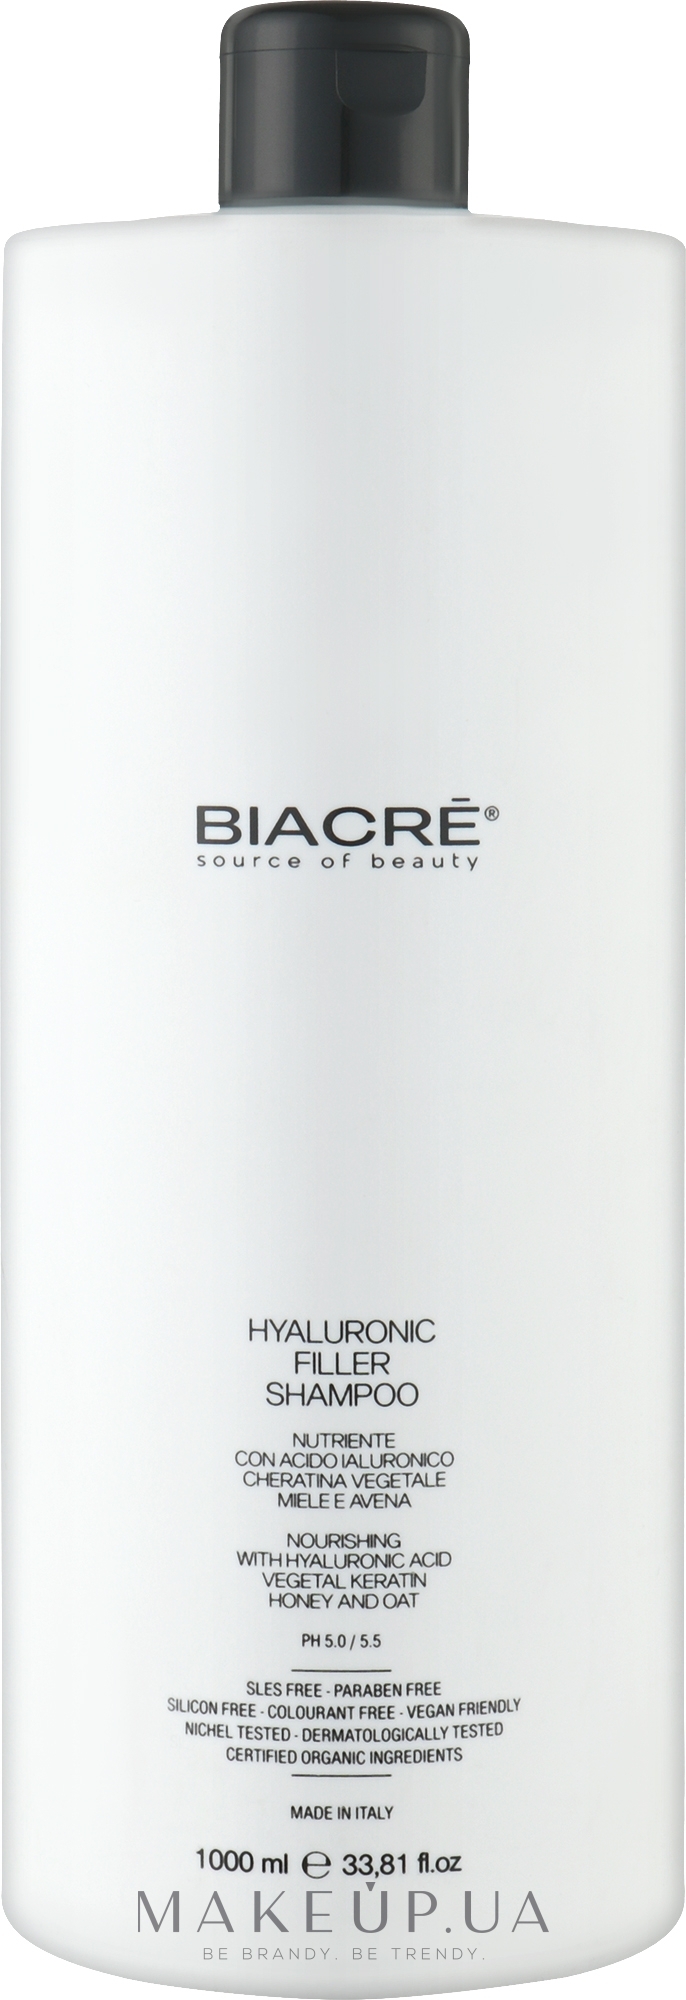 Укрепляющий гиалуроновый филлер-шампунь - Biacre Hyaluronic Filler Shampoo  — фото 1000ml